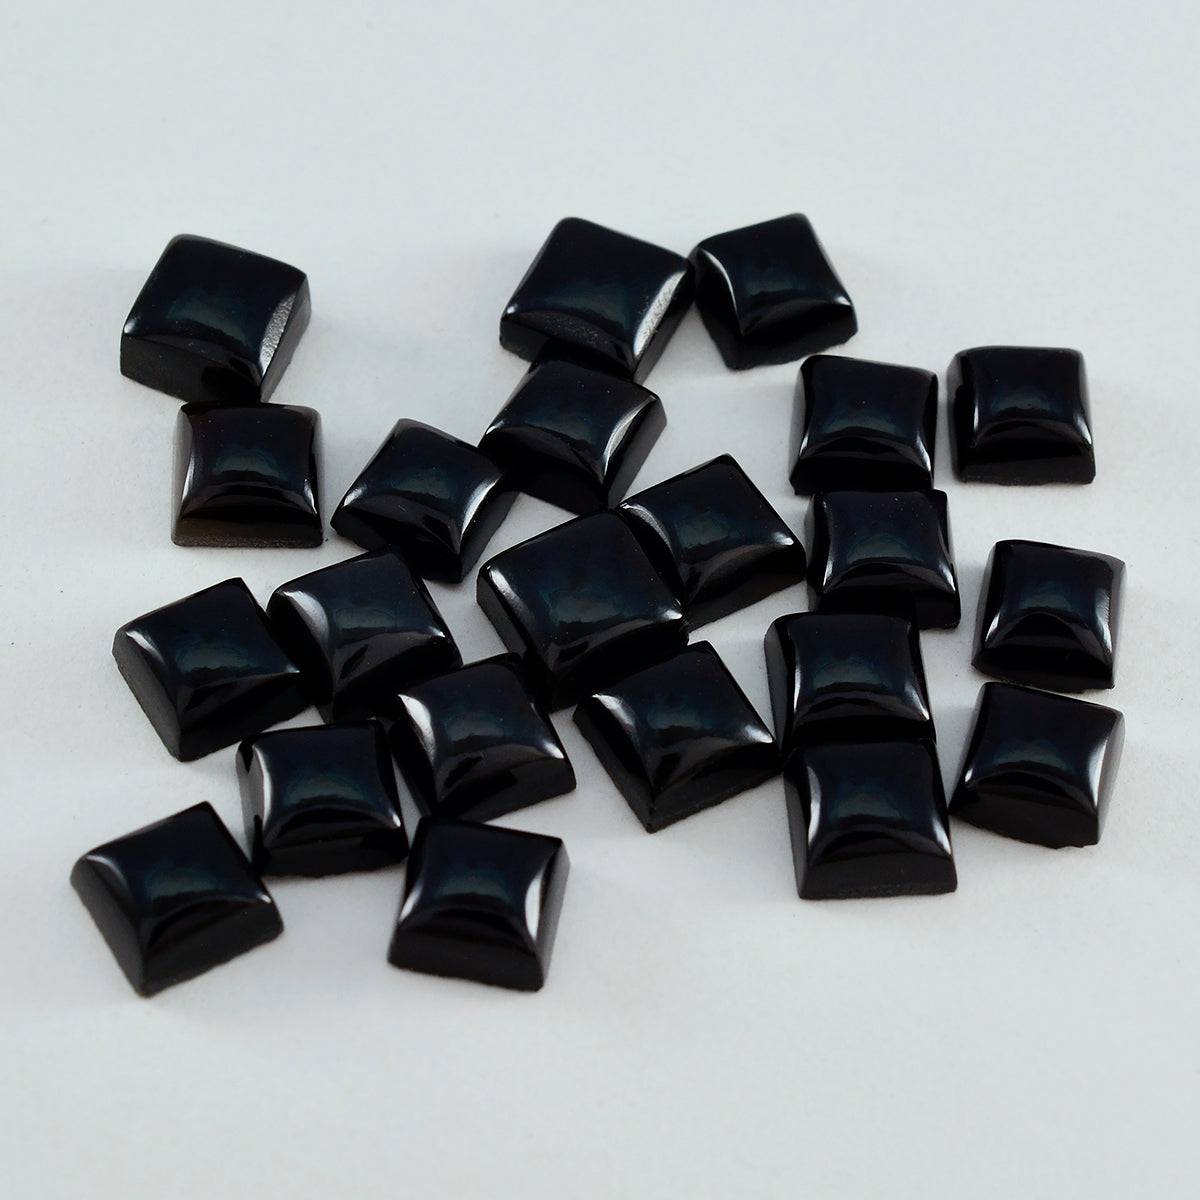 Riyogems 1PC Black Onyx Cabochon 7x7 mm vierkante vorm knappe kwaliteit losse edelsteen